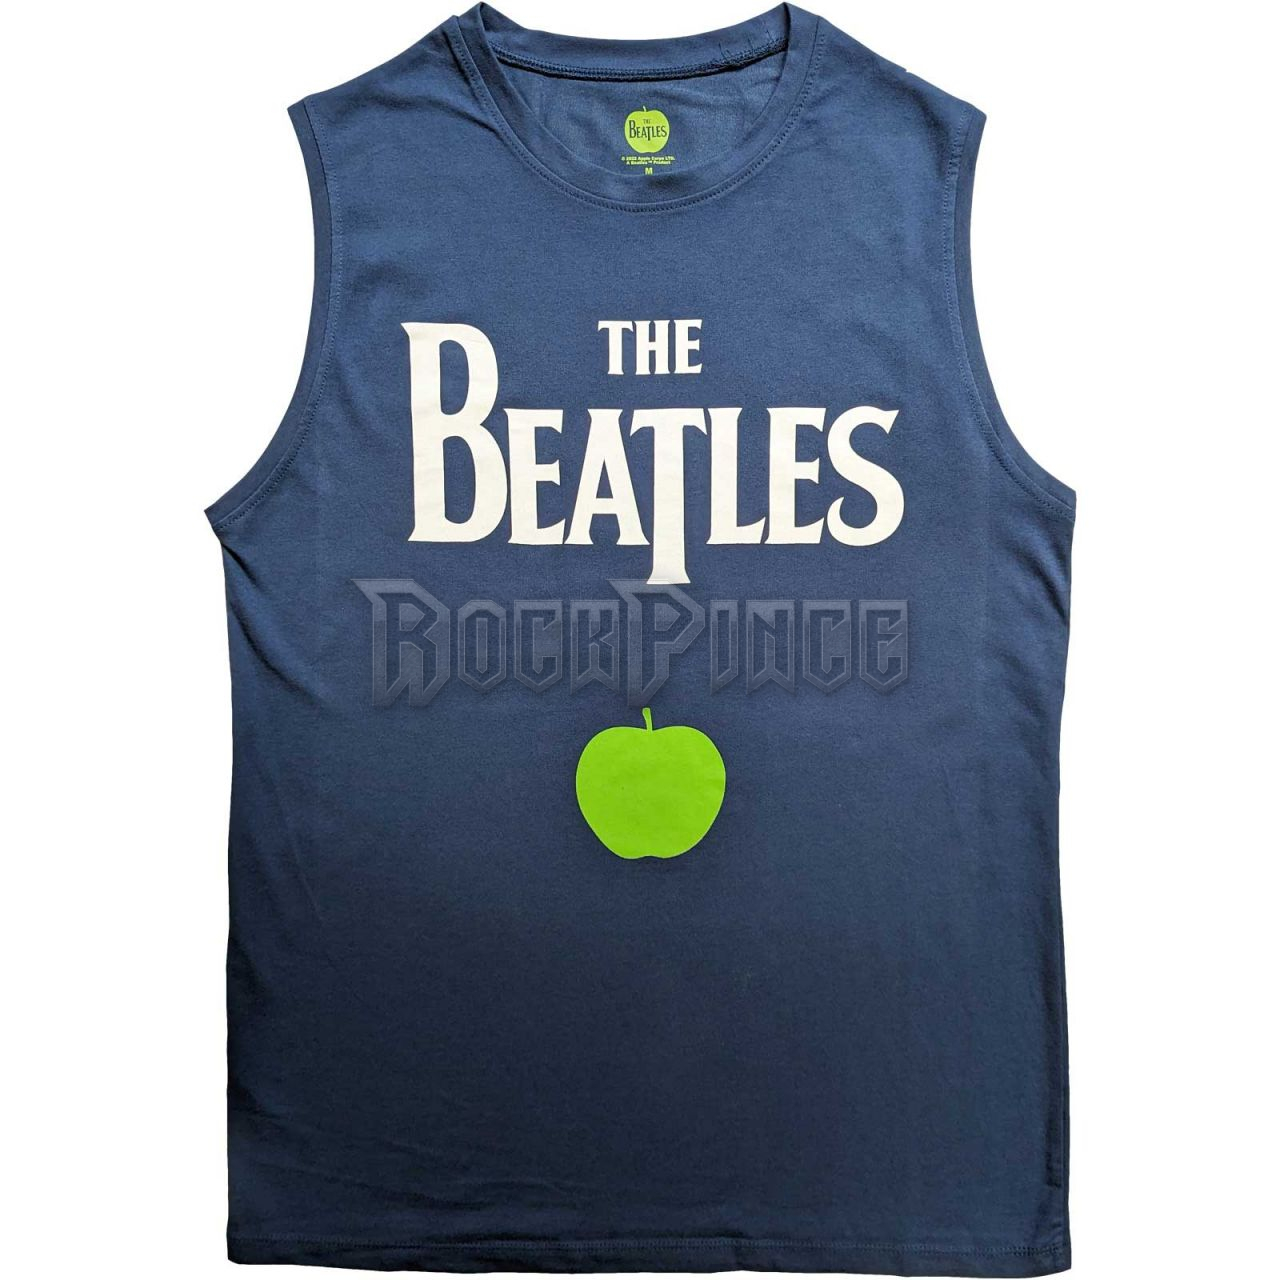 The Beatles - Drop T Logo & Apple - unisex trikó - BEATTANK522MD